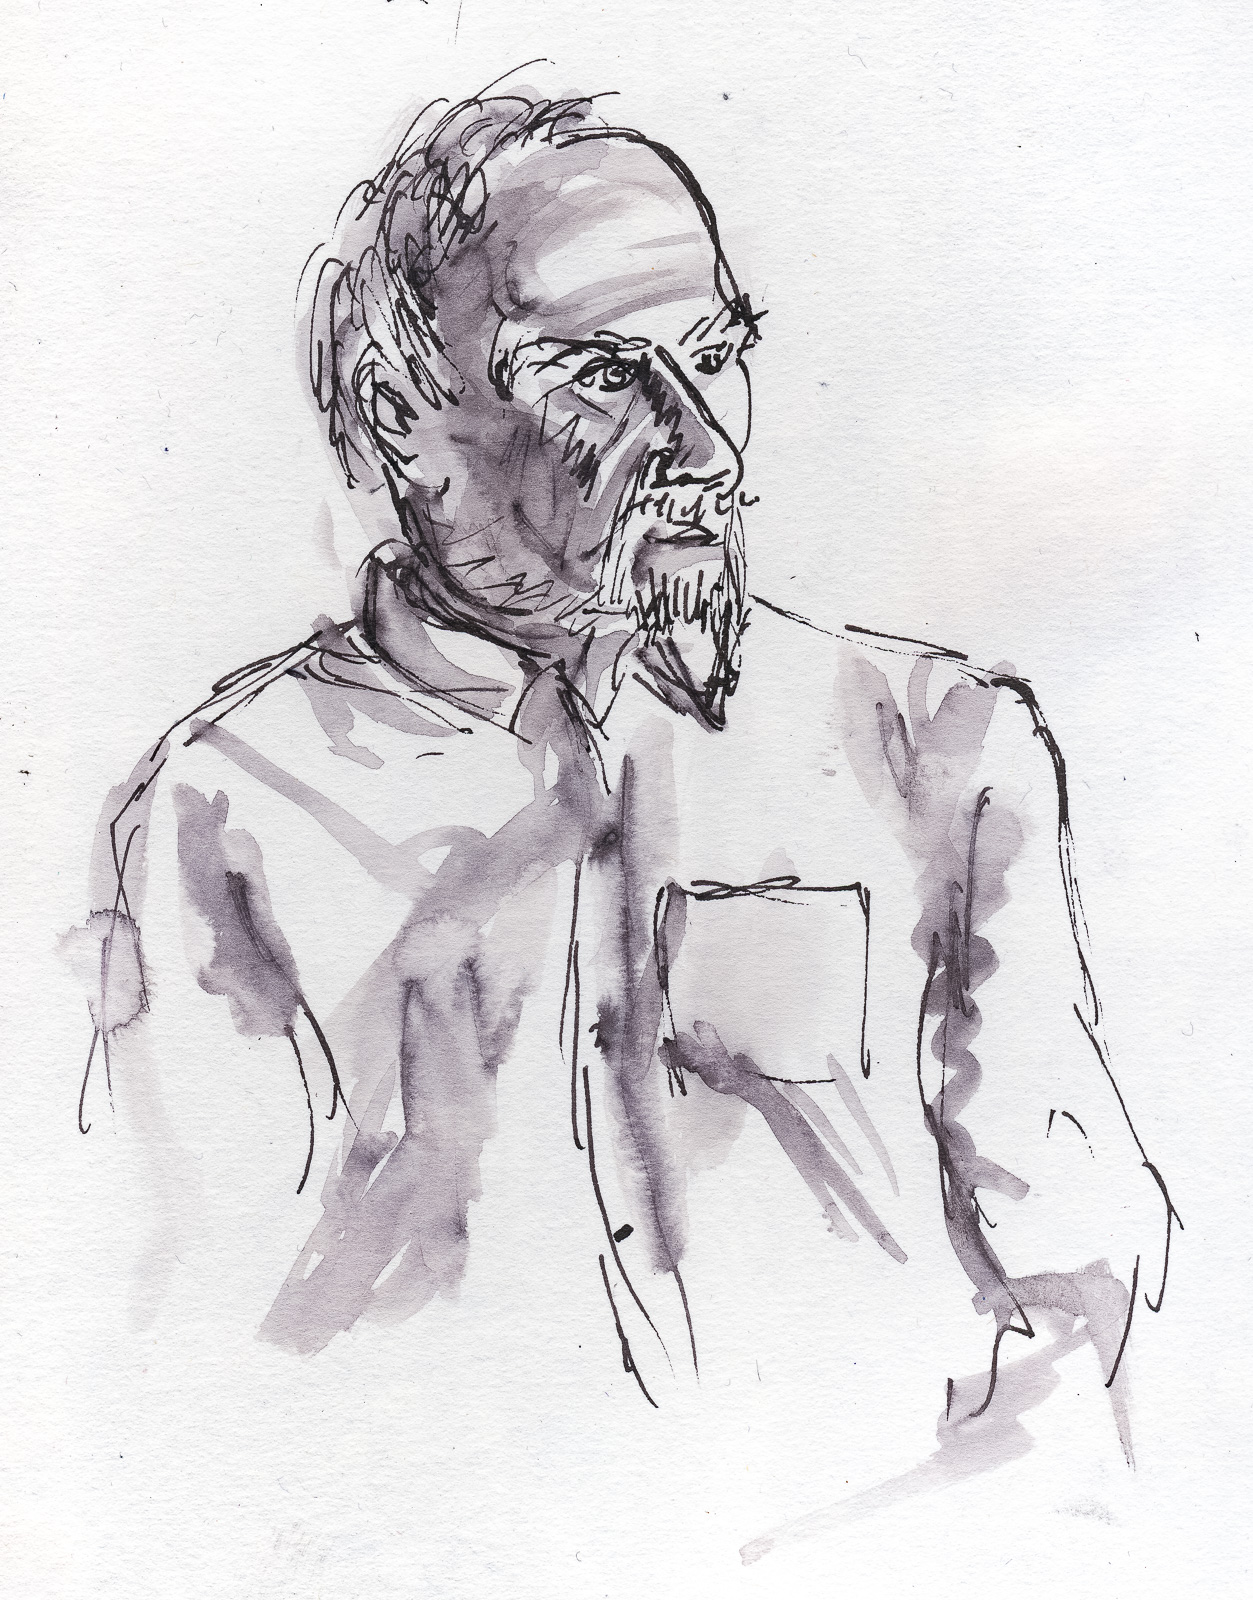 Steve (detail), Portraits At The Pub, Fountain Pen and Wash, A4 Artway Mixed Media sketchbook.